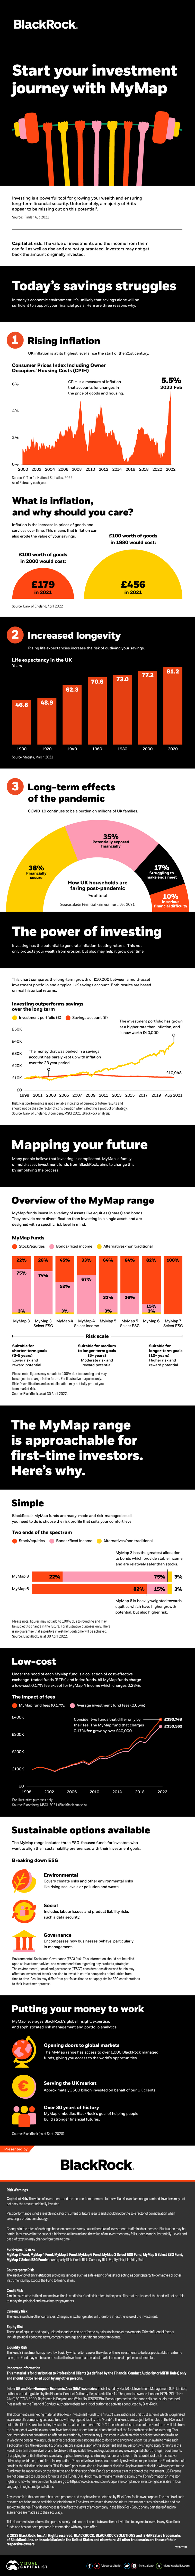 blackrock mymap: designed for first-time investors – visual capitalist